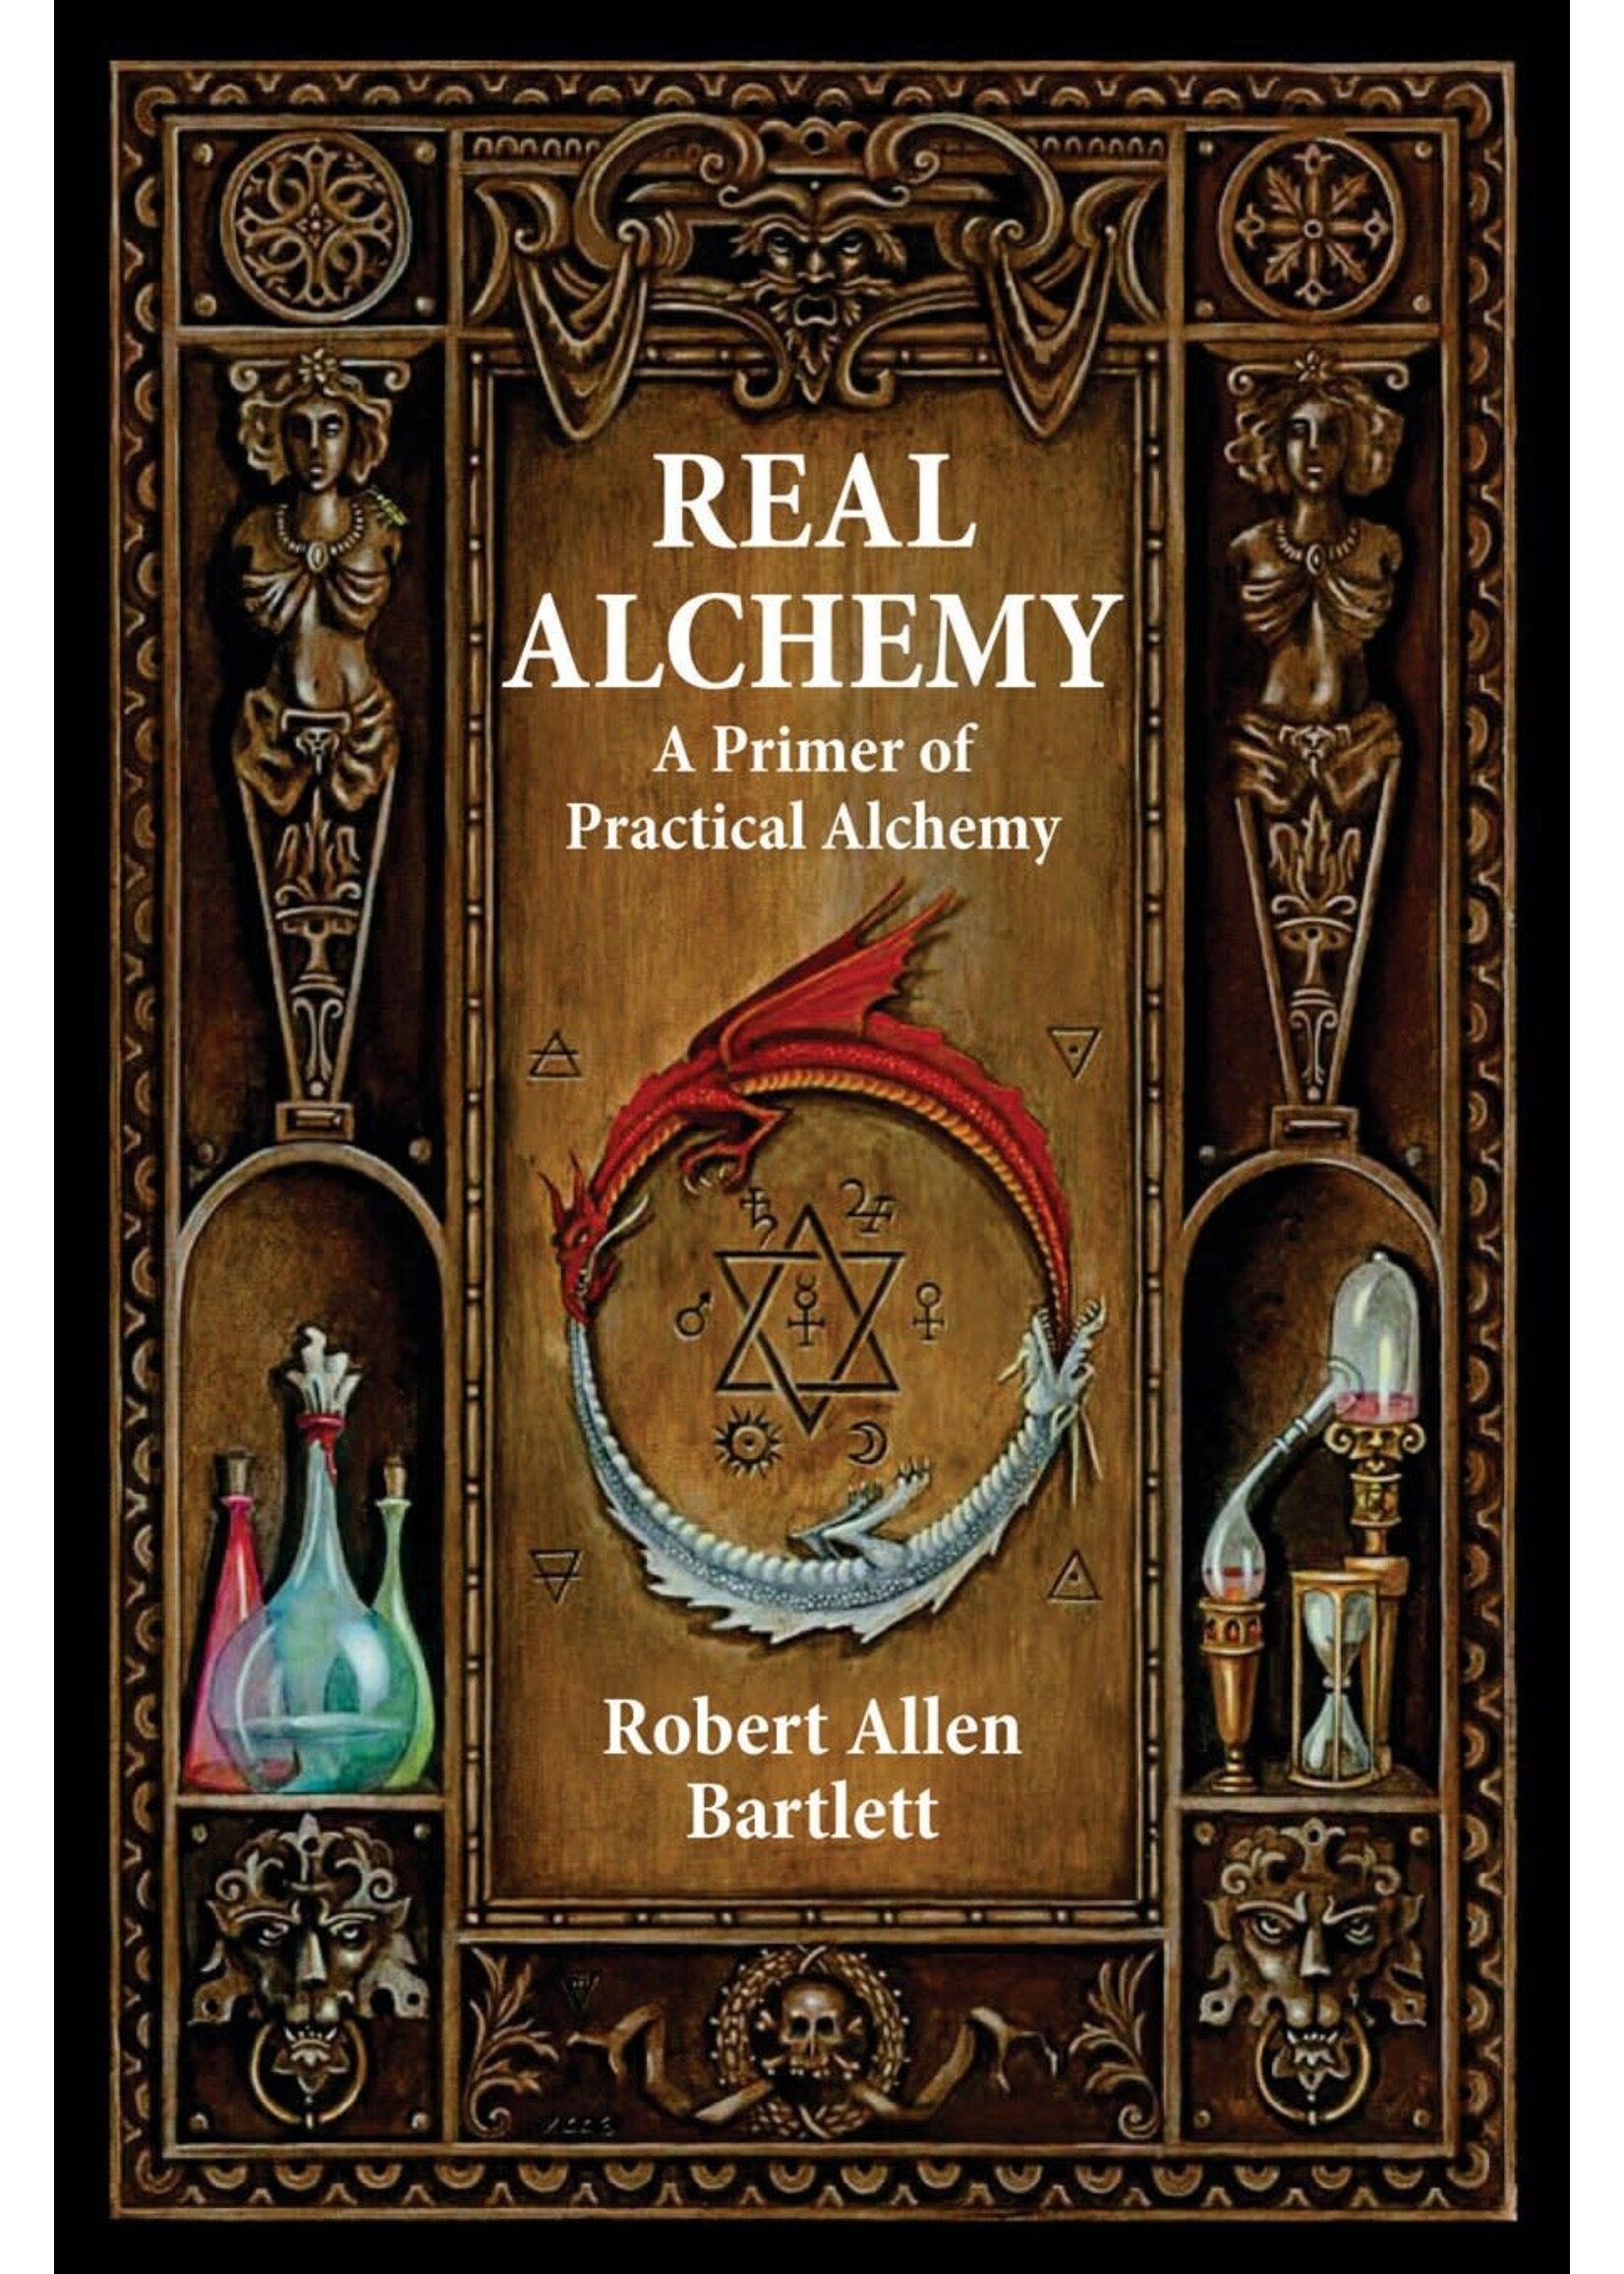 Real Alchemy: A Primer of Practical Alchemy by Robert Allen Bartlett